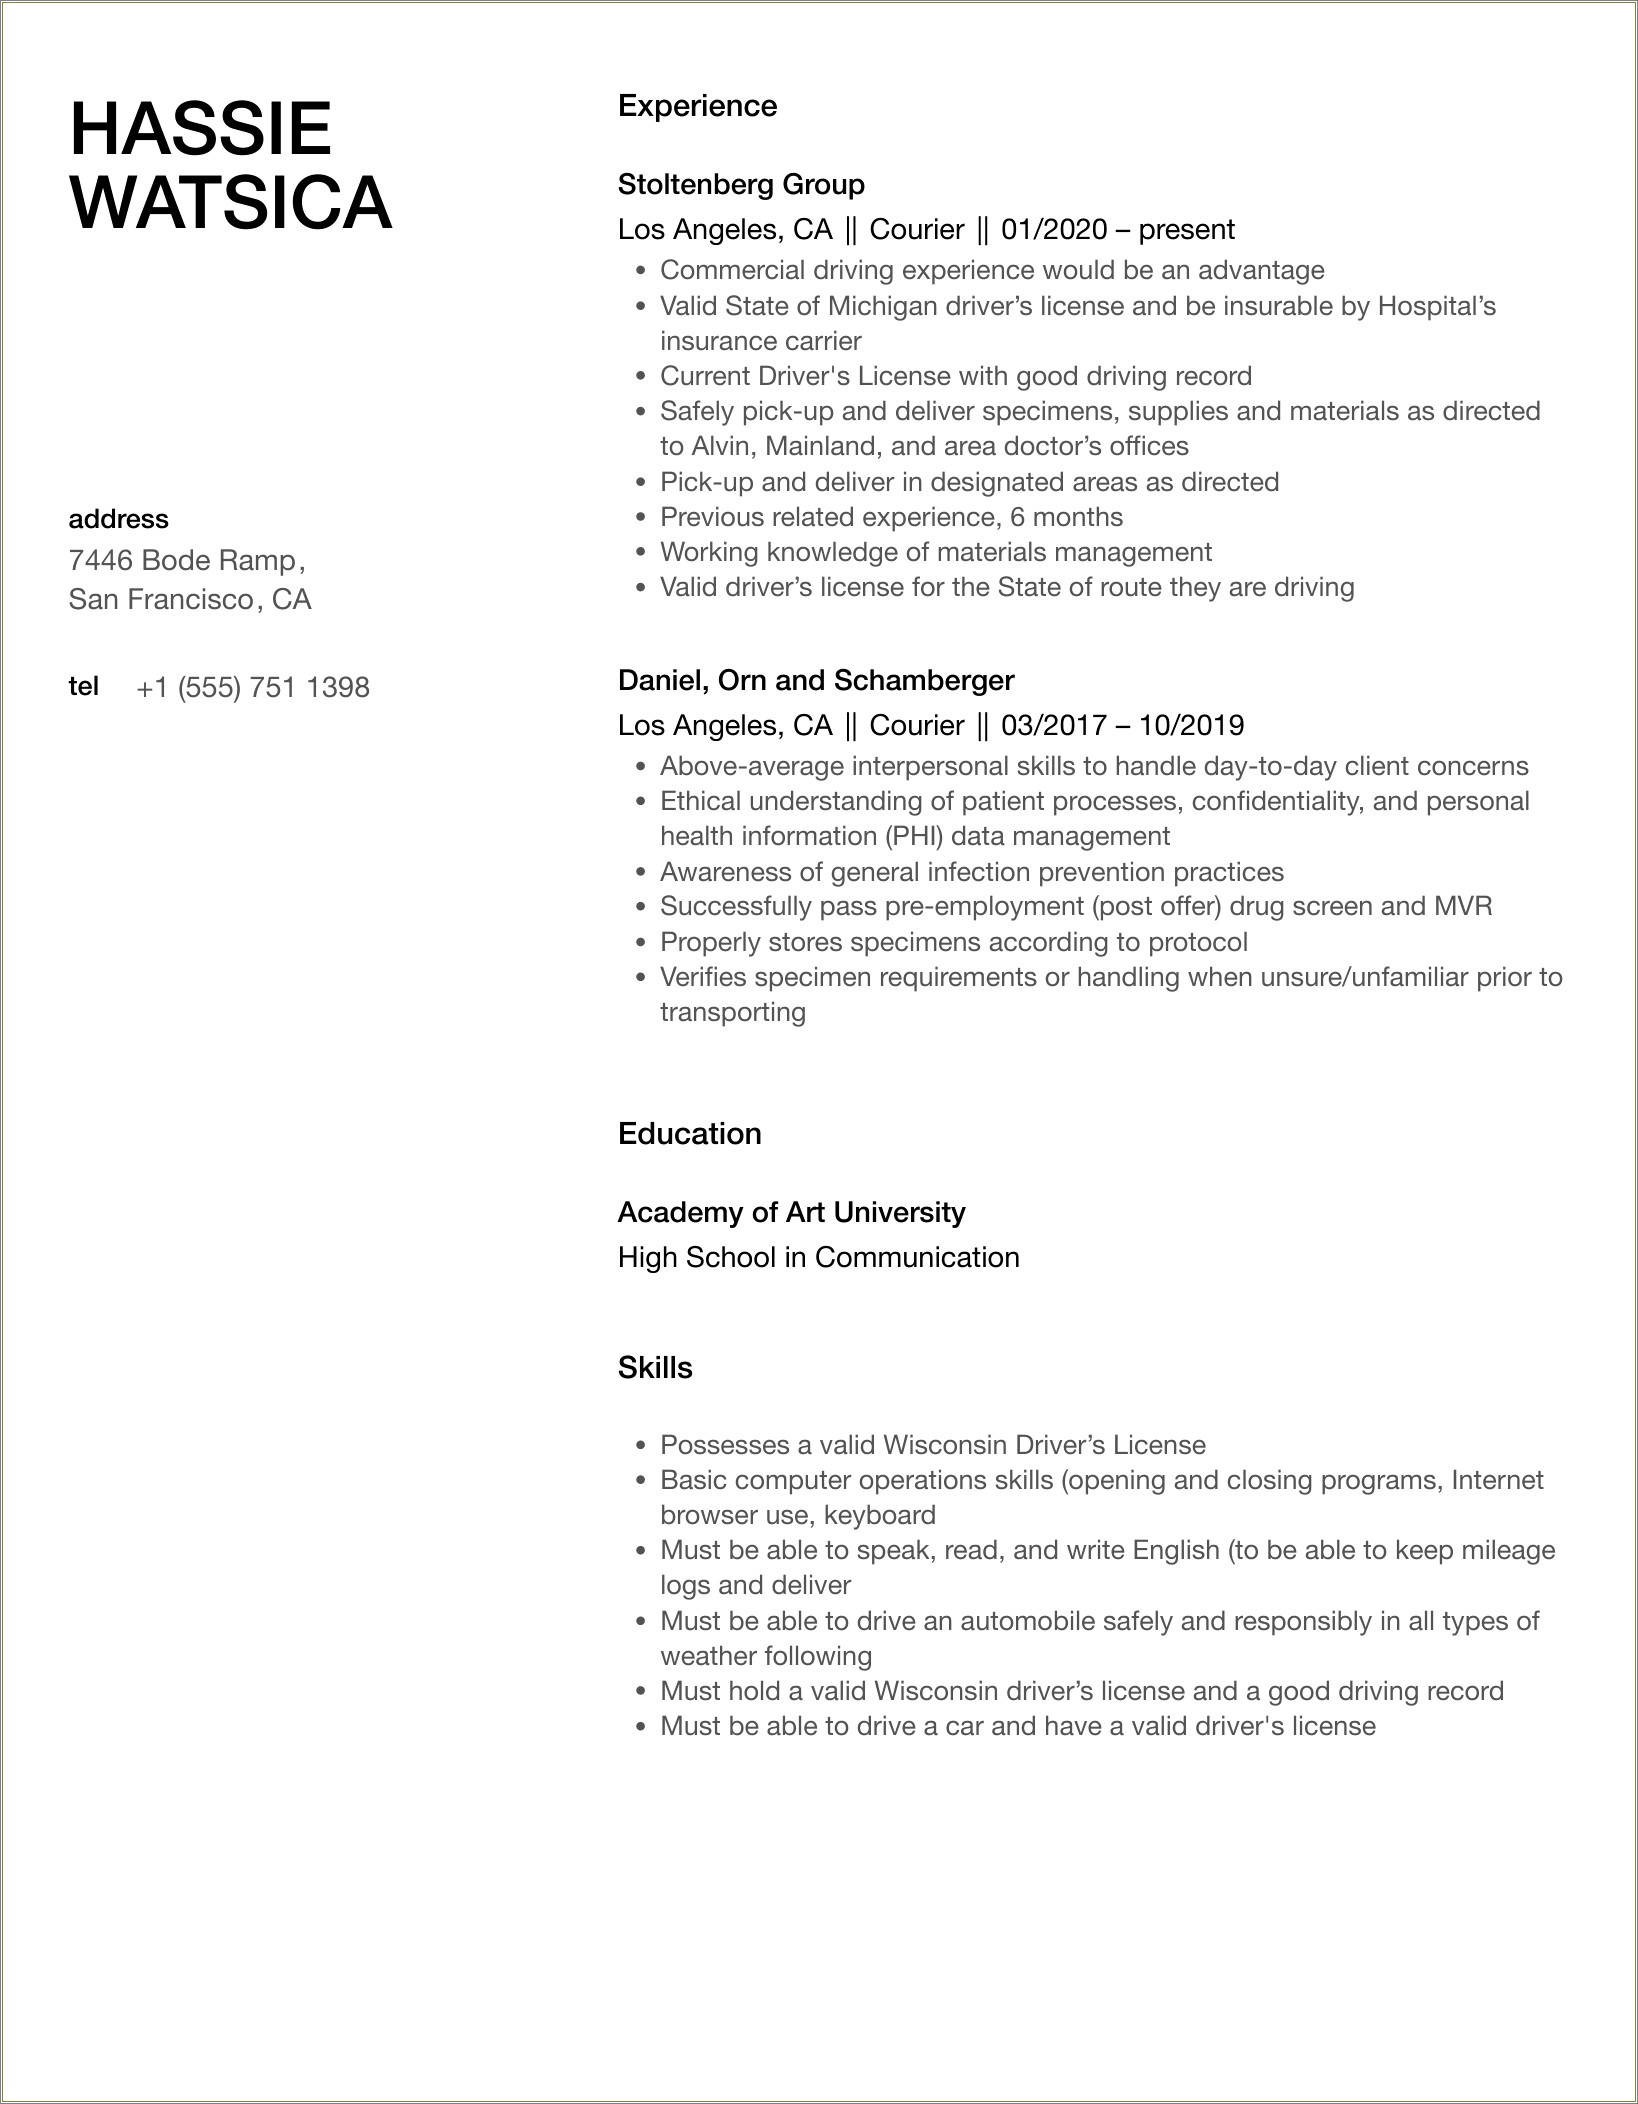 Fedex Courier Job Responsibilities For Resume